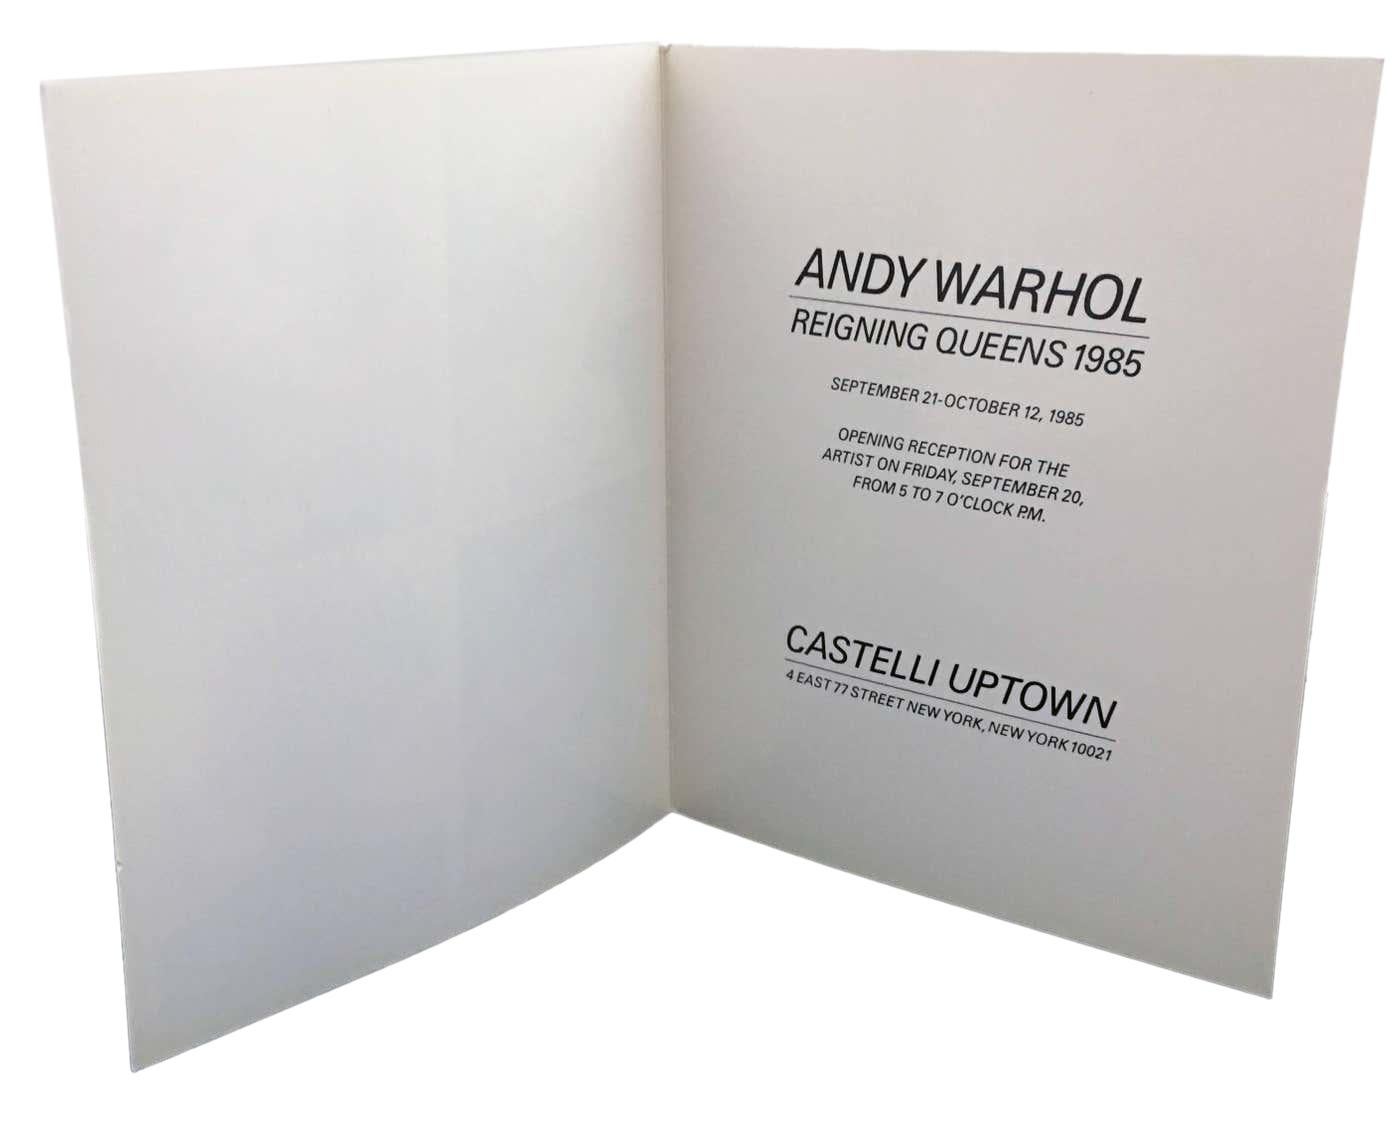 Announcement du reine d'honneur Warhol 1985 (Warhol Reine Elizabeth) - Pop Art Art par Andy Warhol